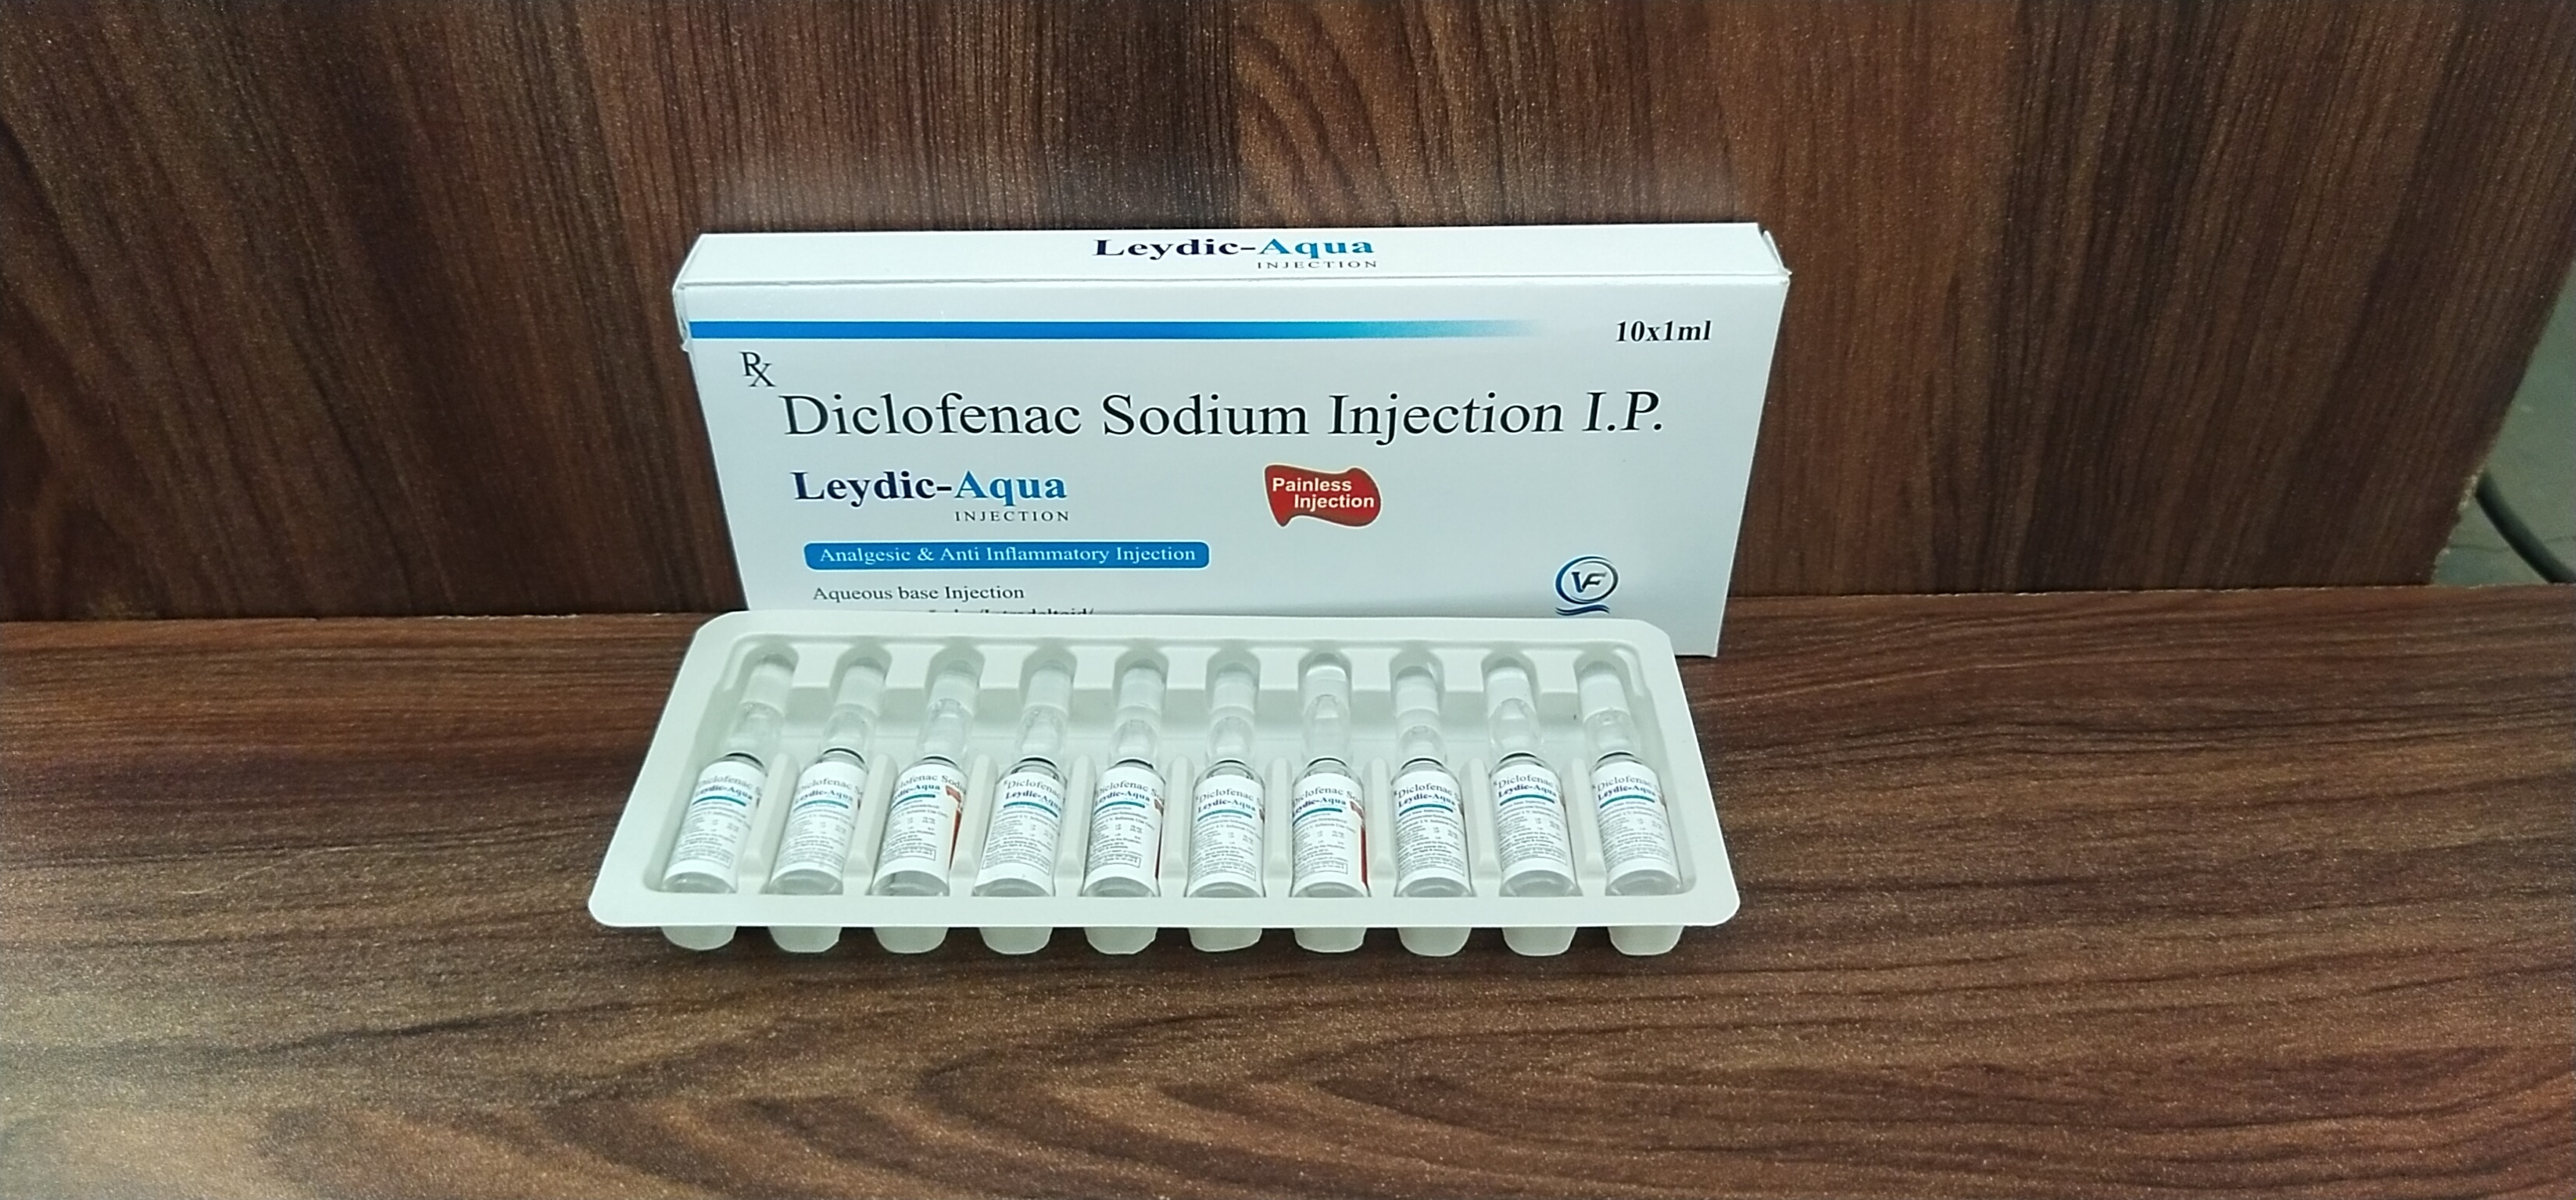 Diclofenac sodium injection